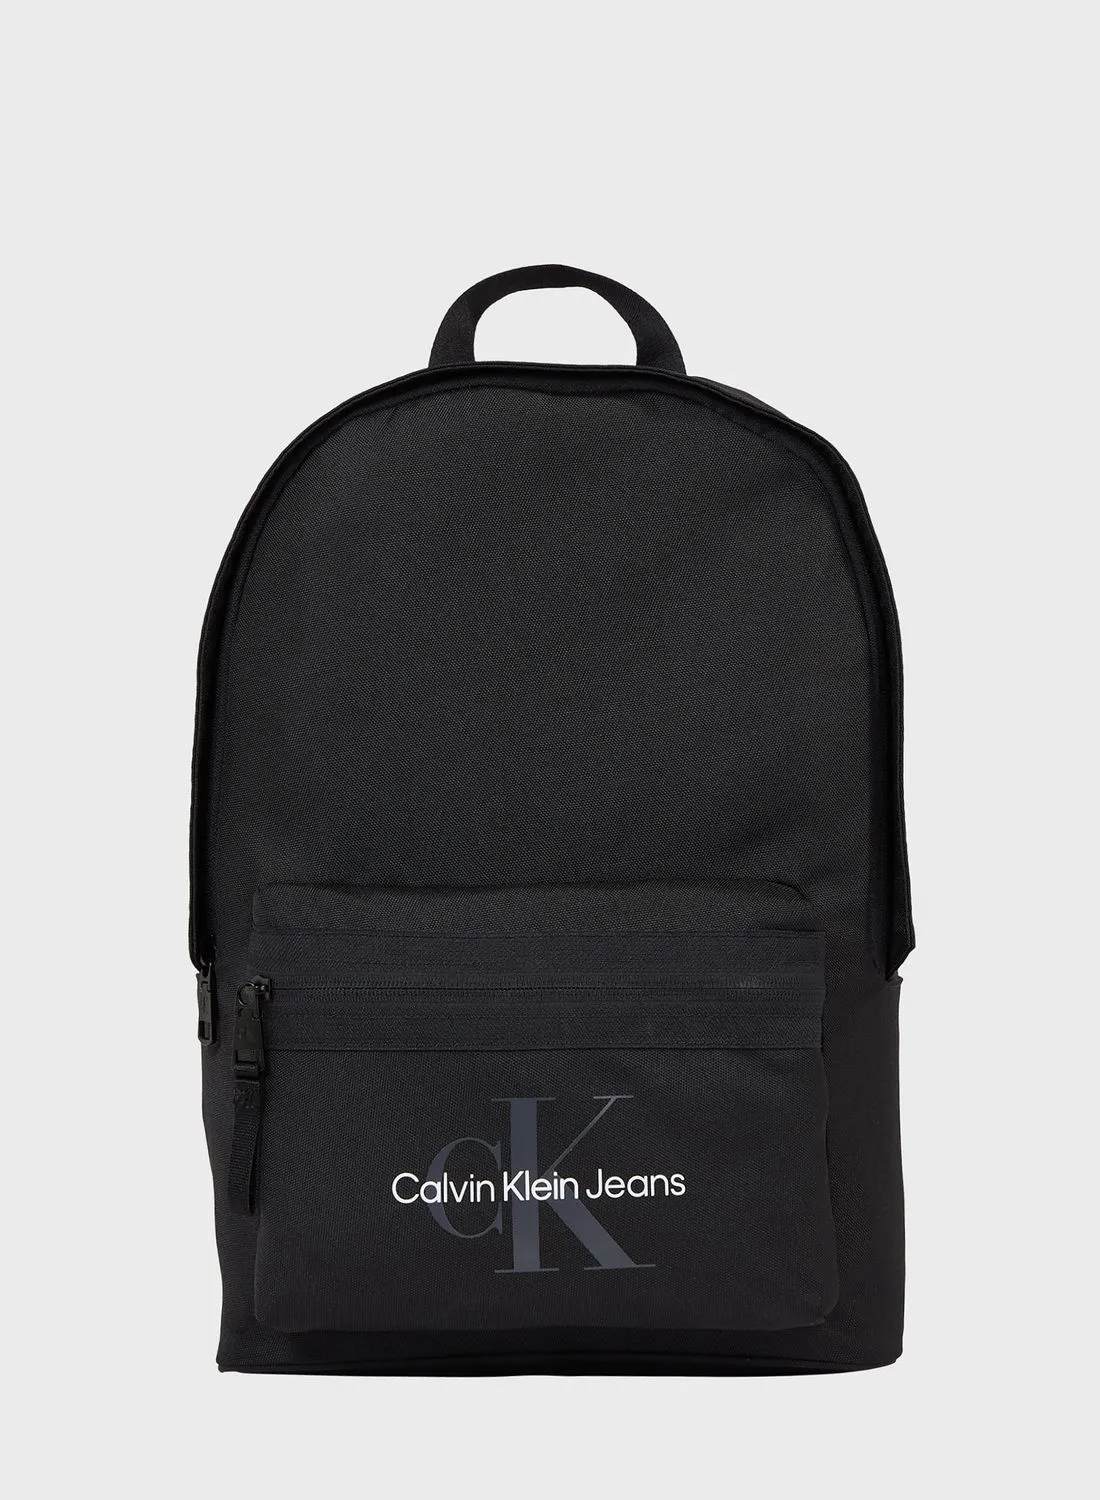 Calvin Klein Jeans Front Pocket Zip Backpack